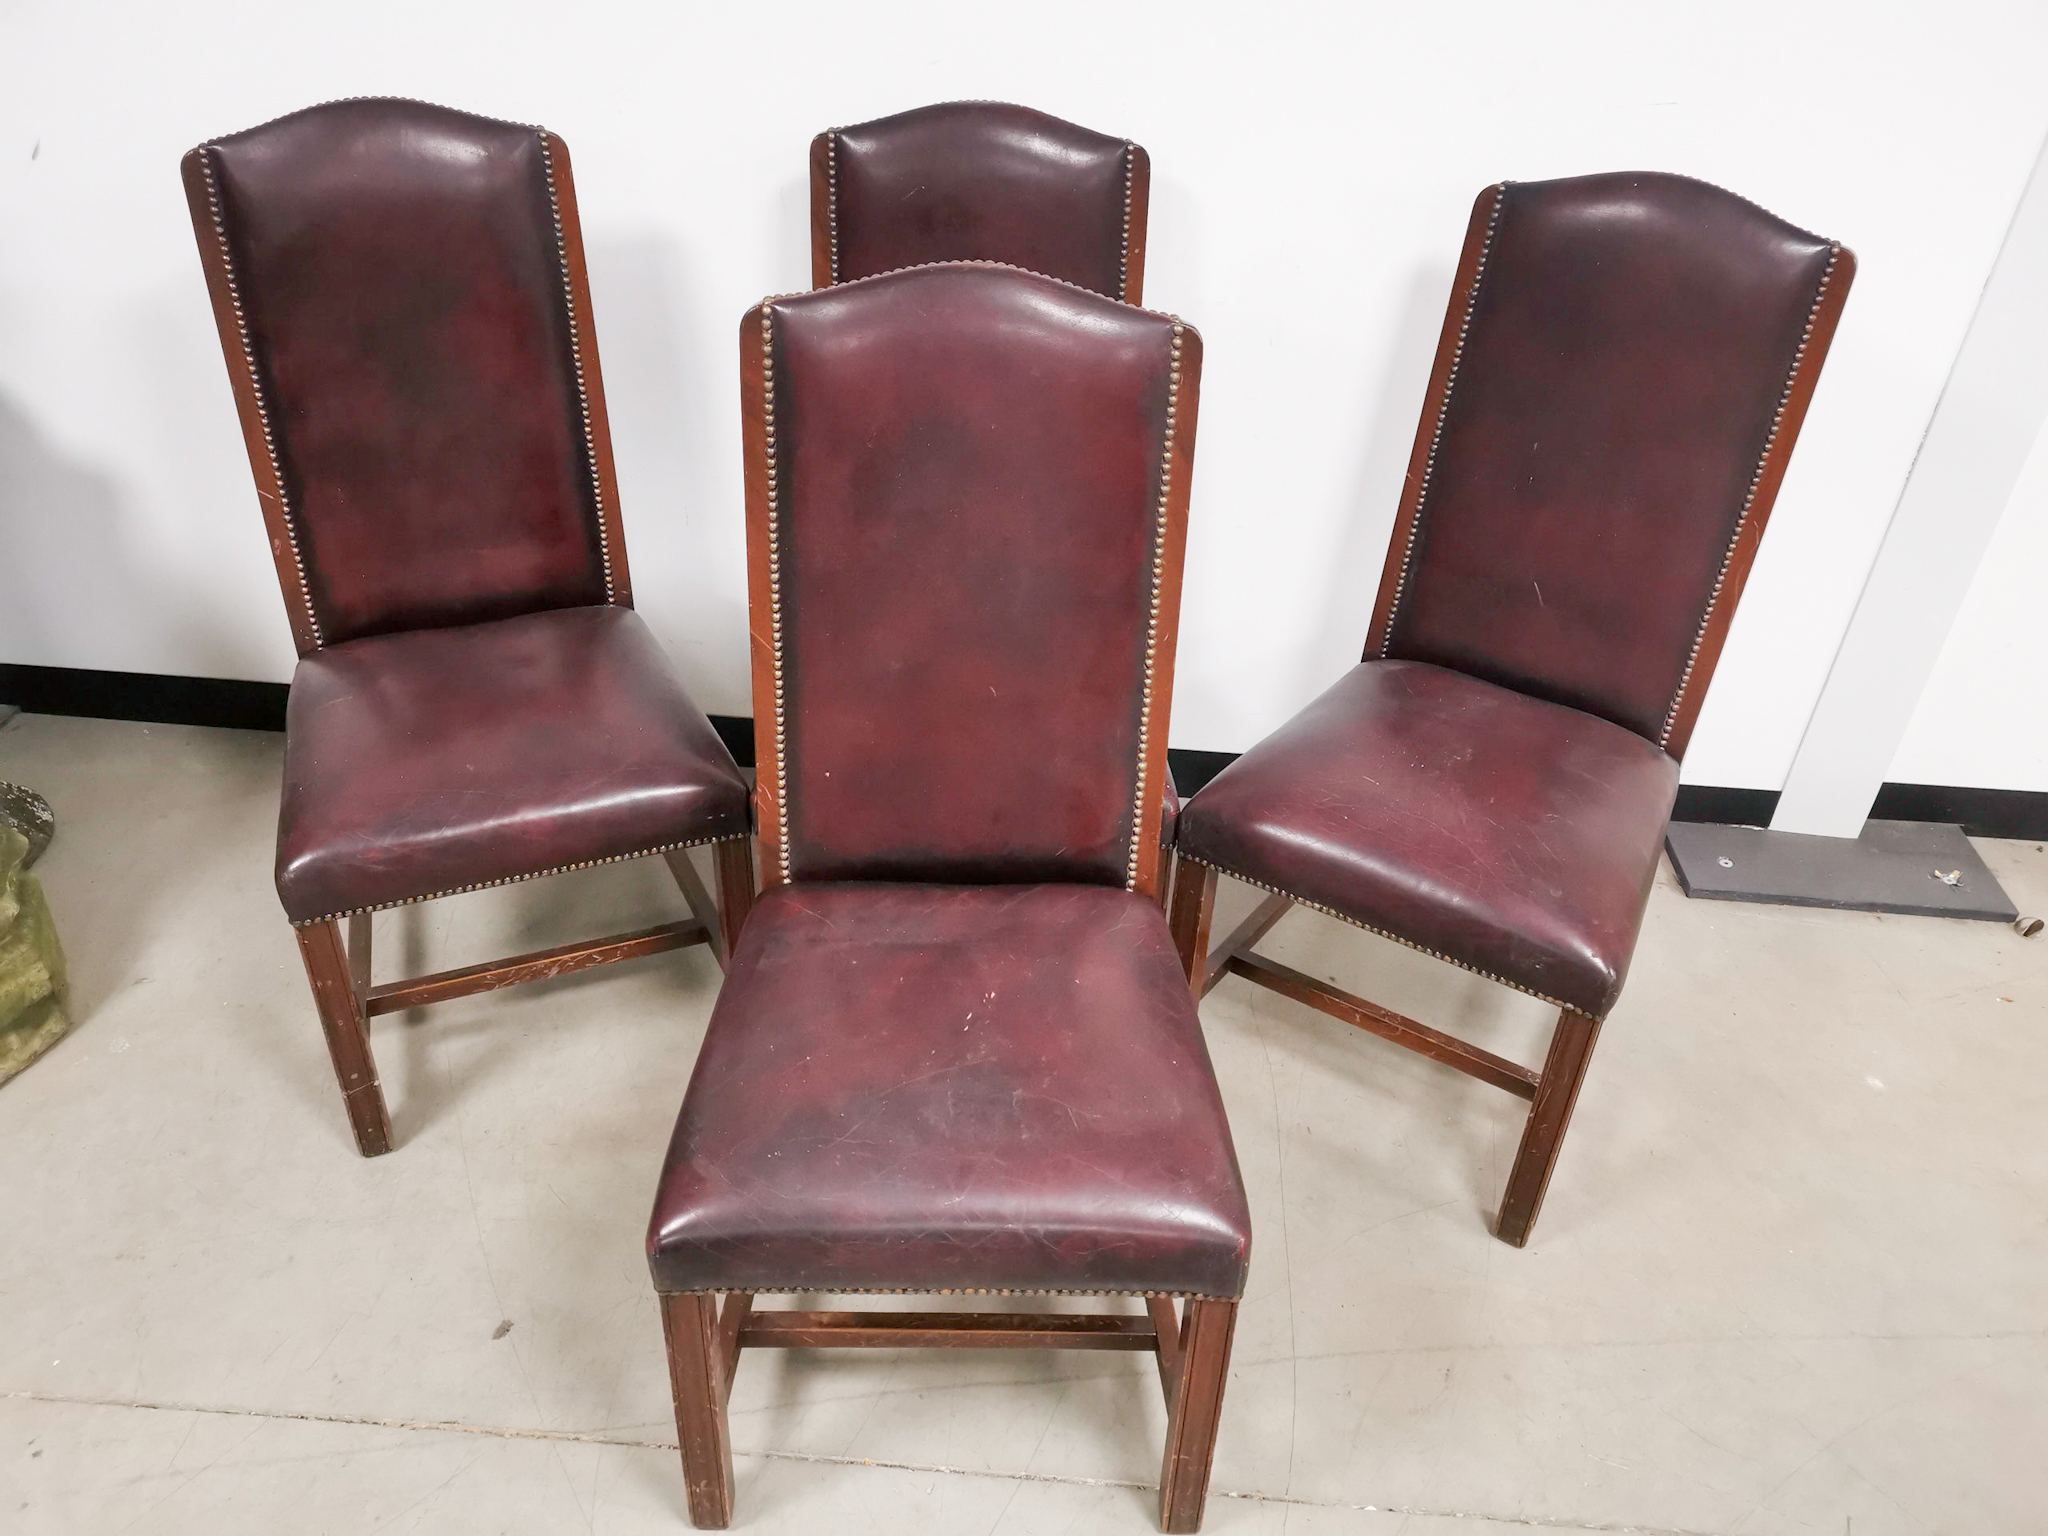 Set of four modern dark red leatherette chairs, 53cm W x 57cm D x 110cm H